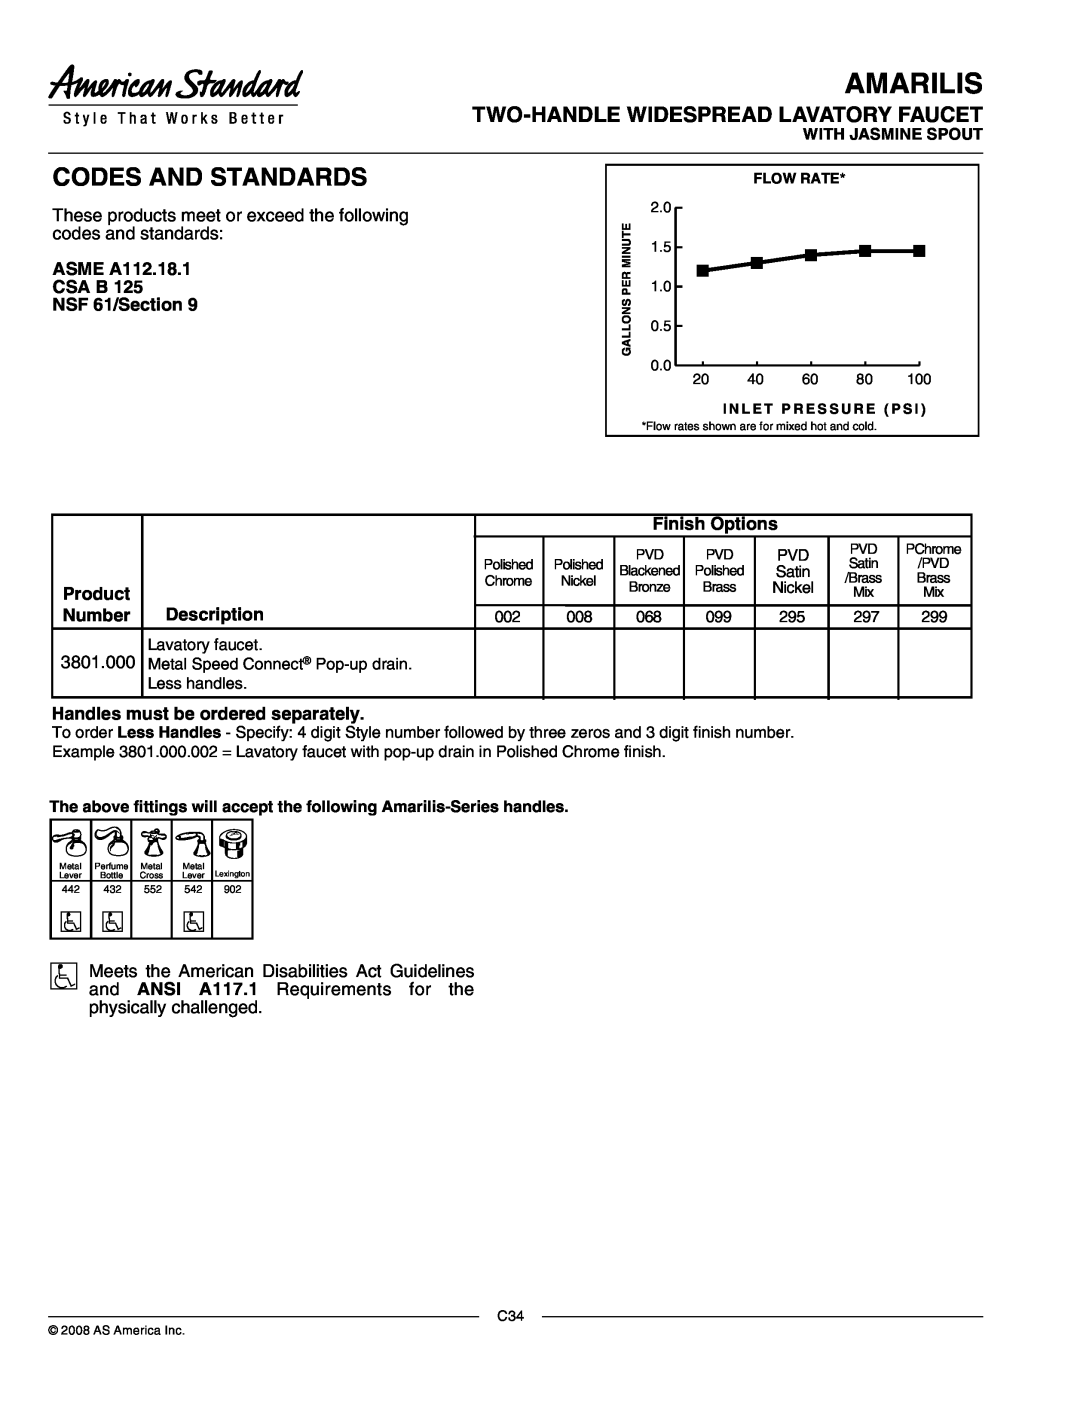 American Standard ASME A112.18.1 Csa B, NSF 61/Section, Finish Options, Product, Description, Number, Amarilis, 3801.000 